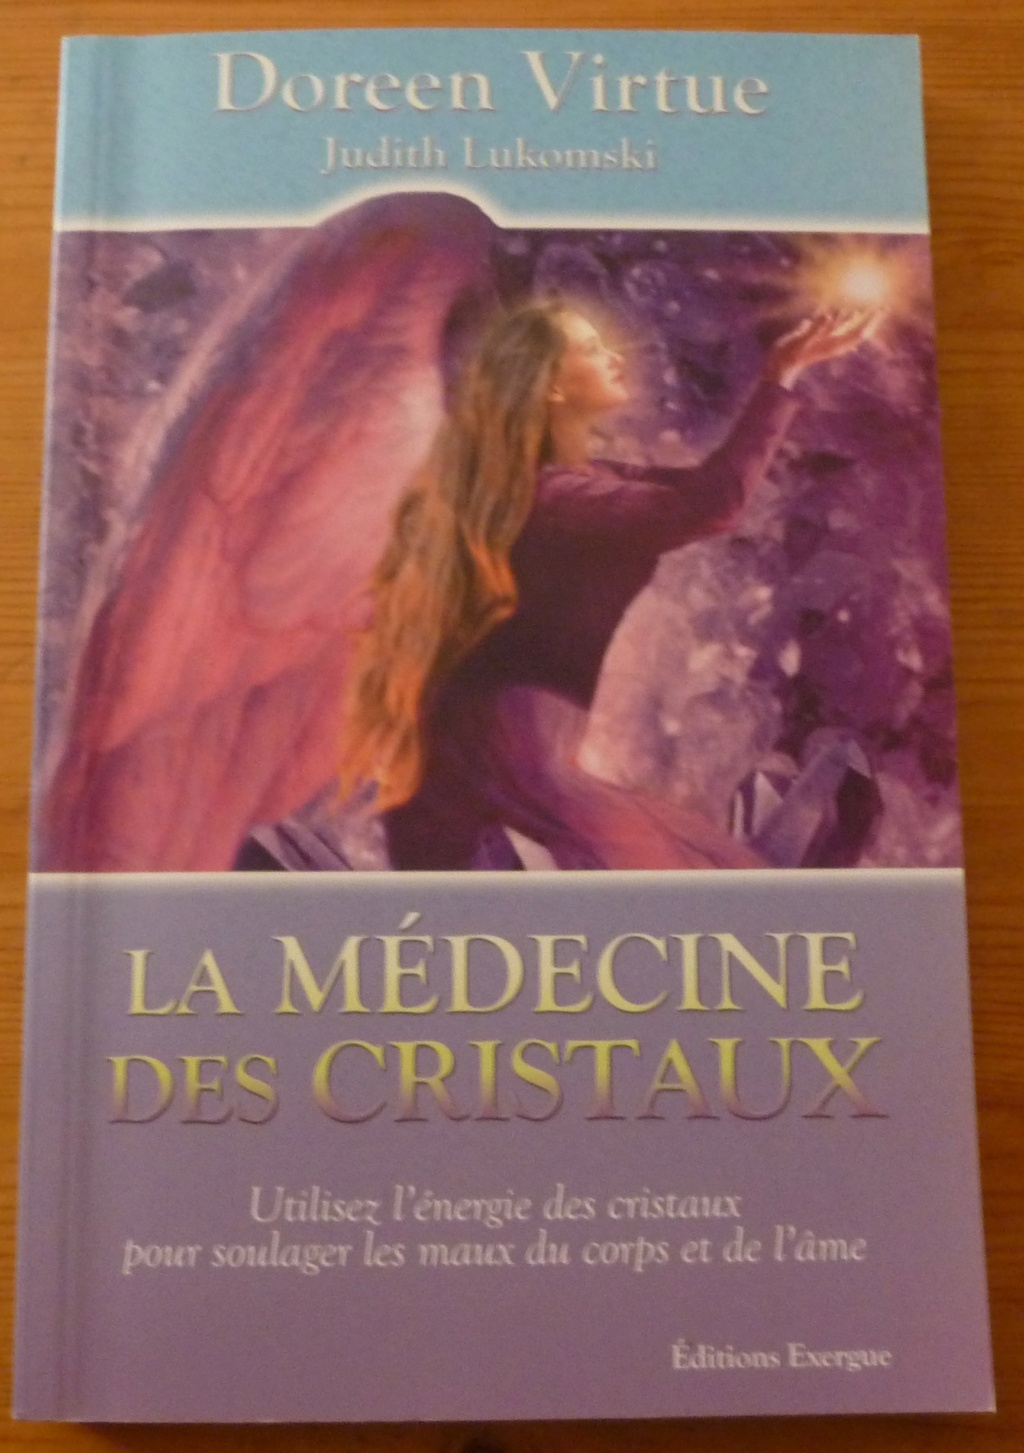 La médecine des cristaux - Doreen Virtue/Judith Lukomski P1010719